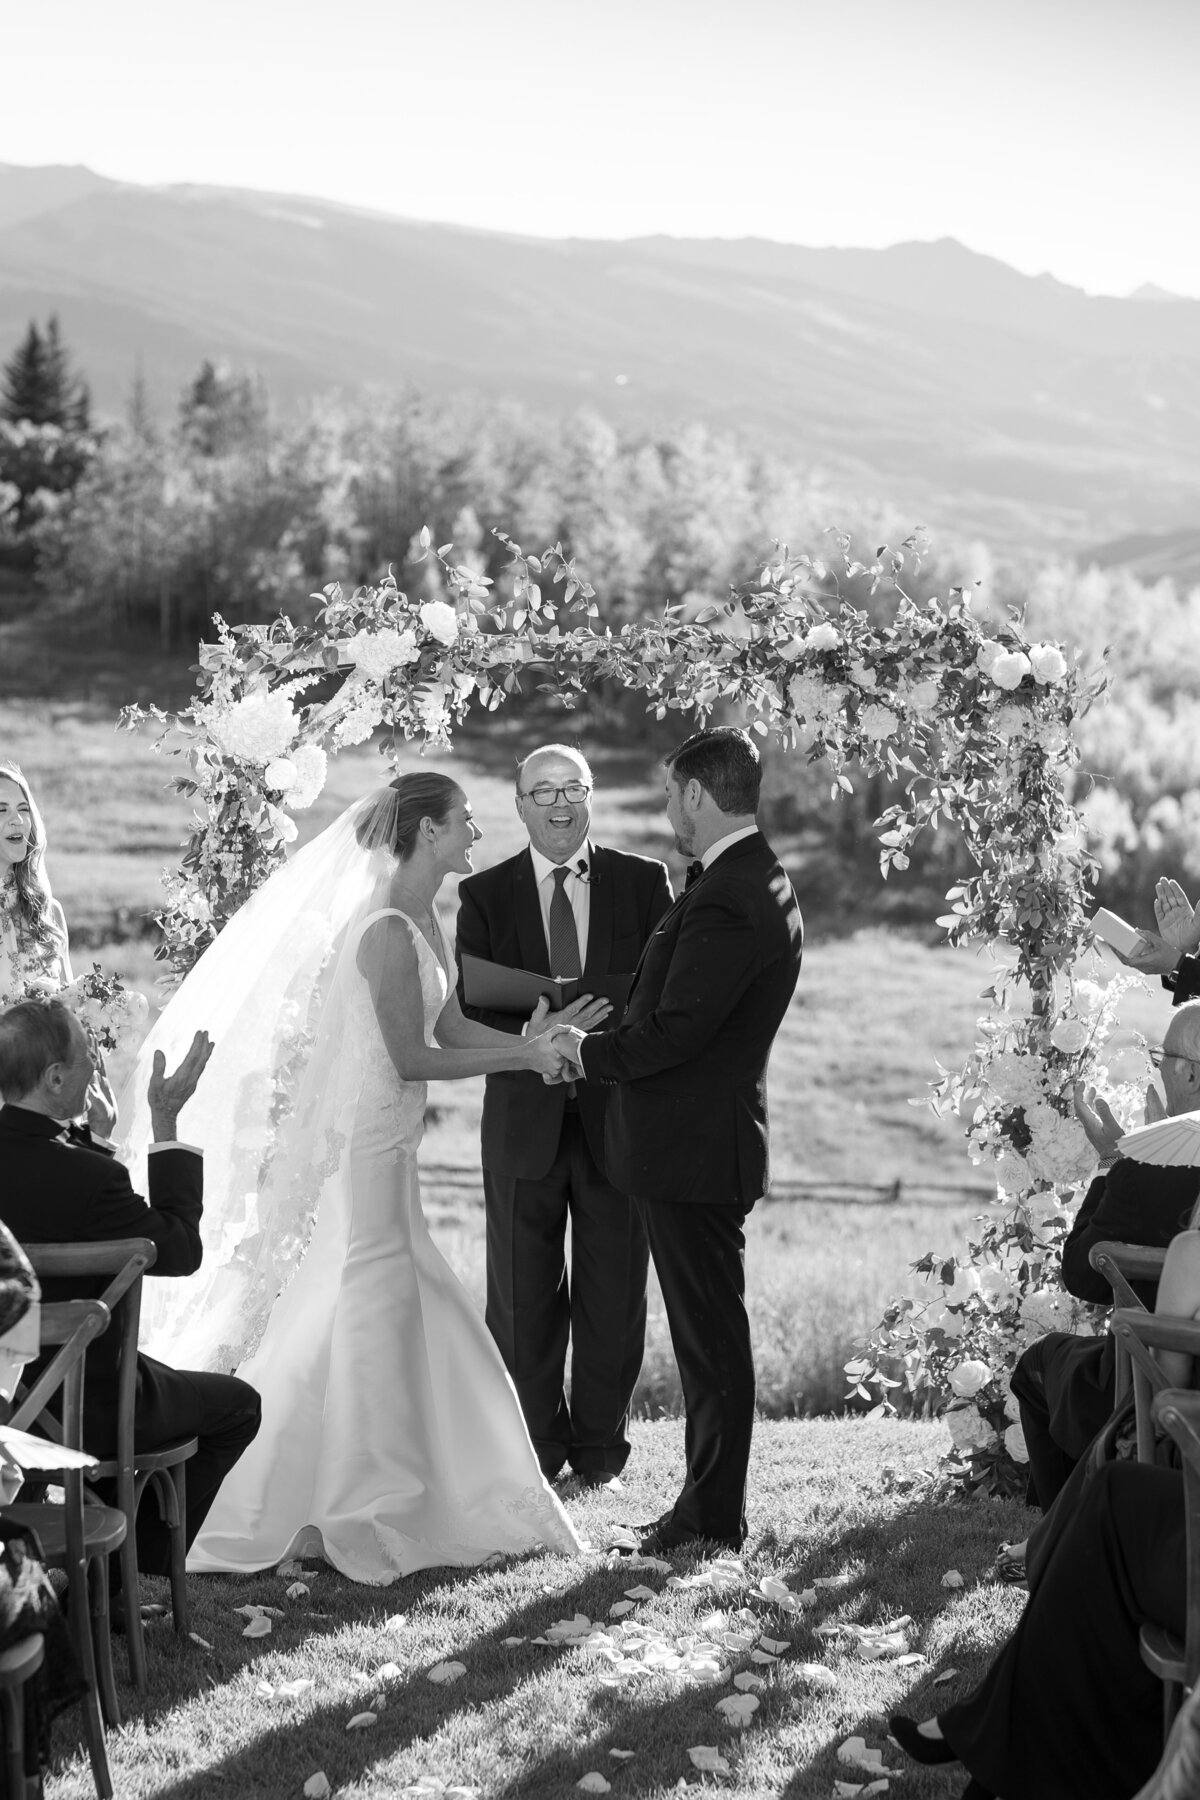 Ceremony vows at Aspen private estate wedding